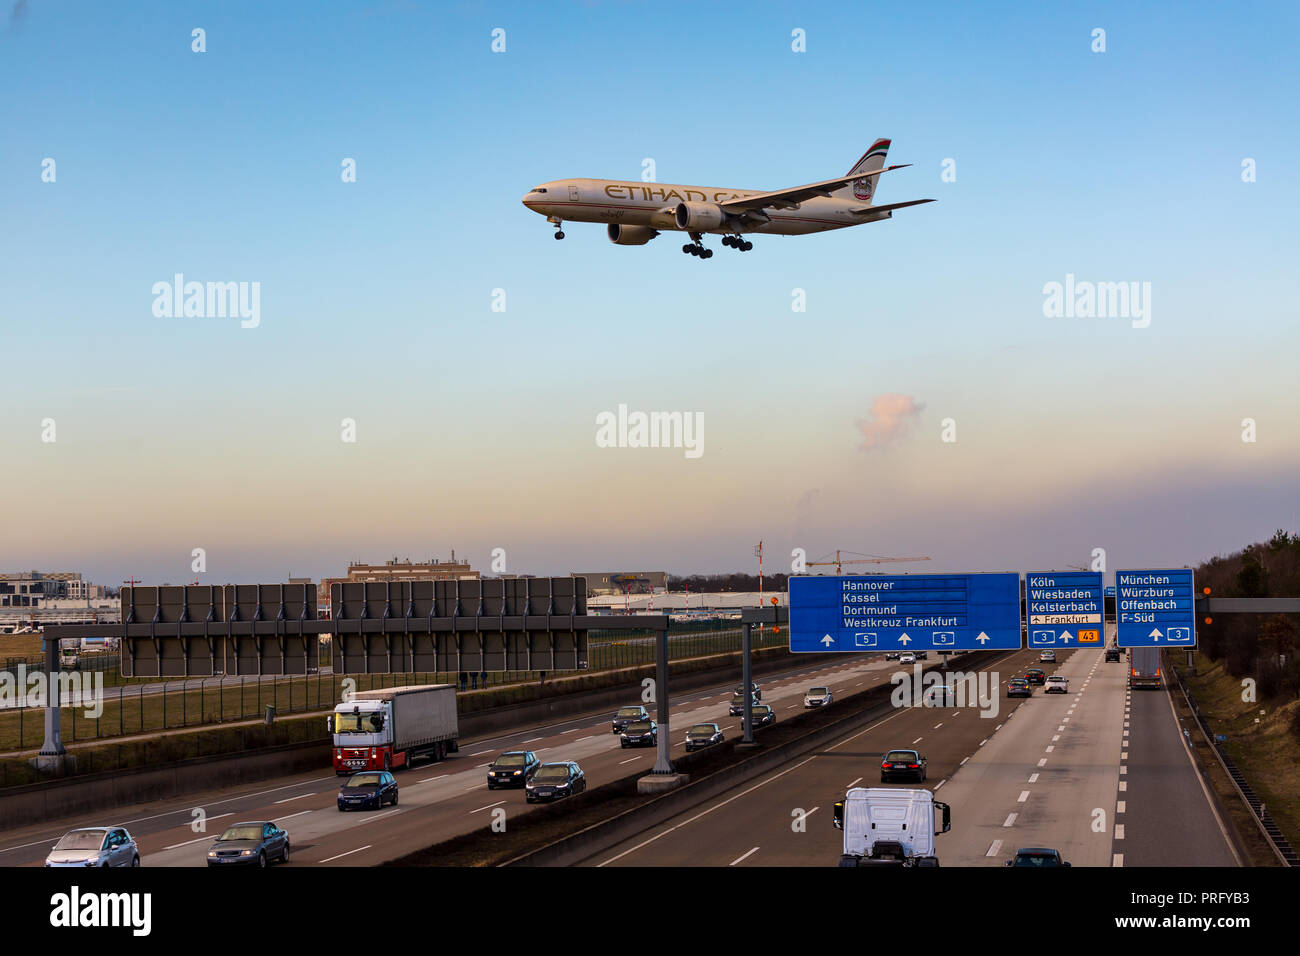 Frankfurt Airport, Germany, February 16th - 2018, Boeing 777 airplane of Etihad Airways flying over german highway autobahn A5 at Frankfurter Kreuz wh Stock Photo